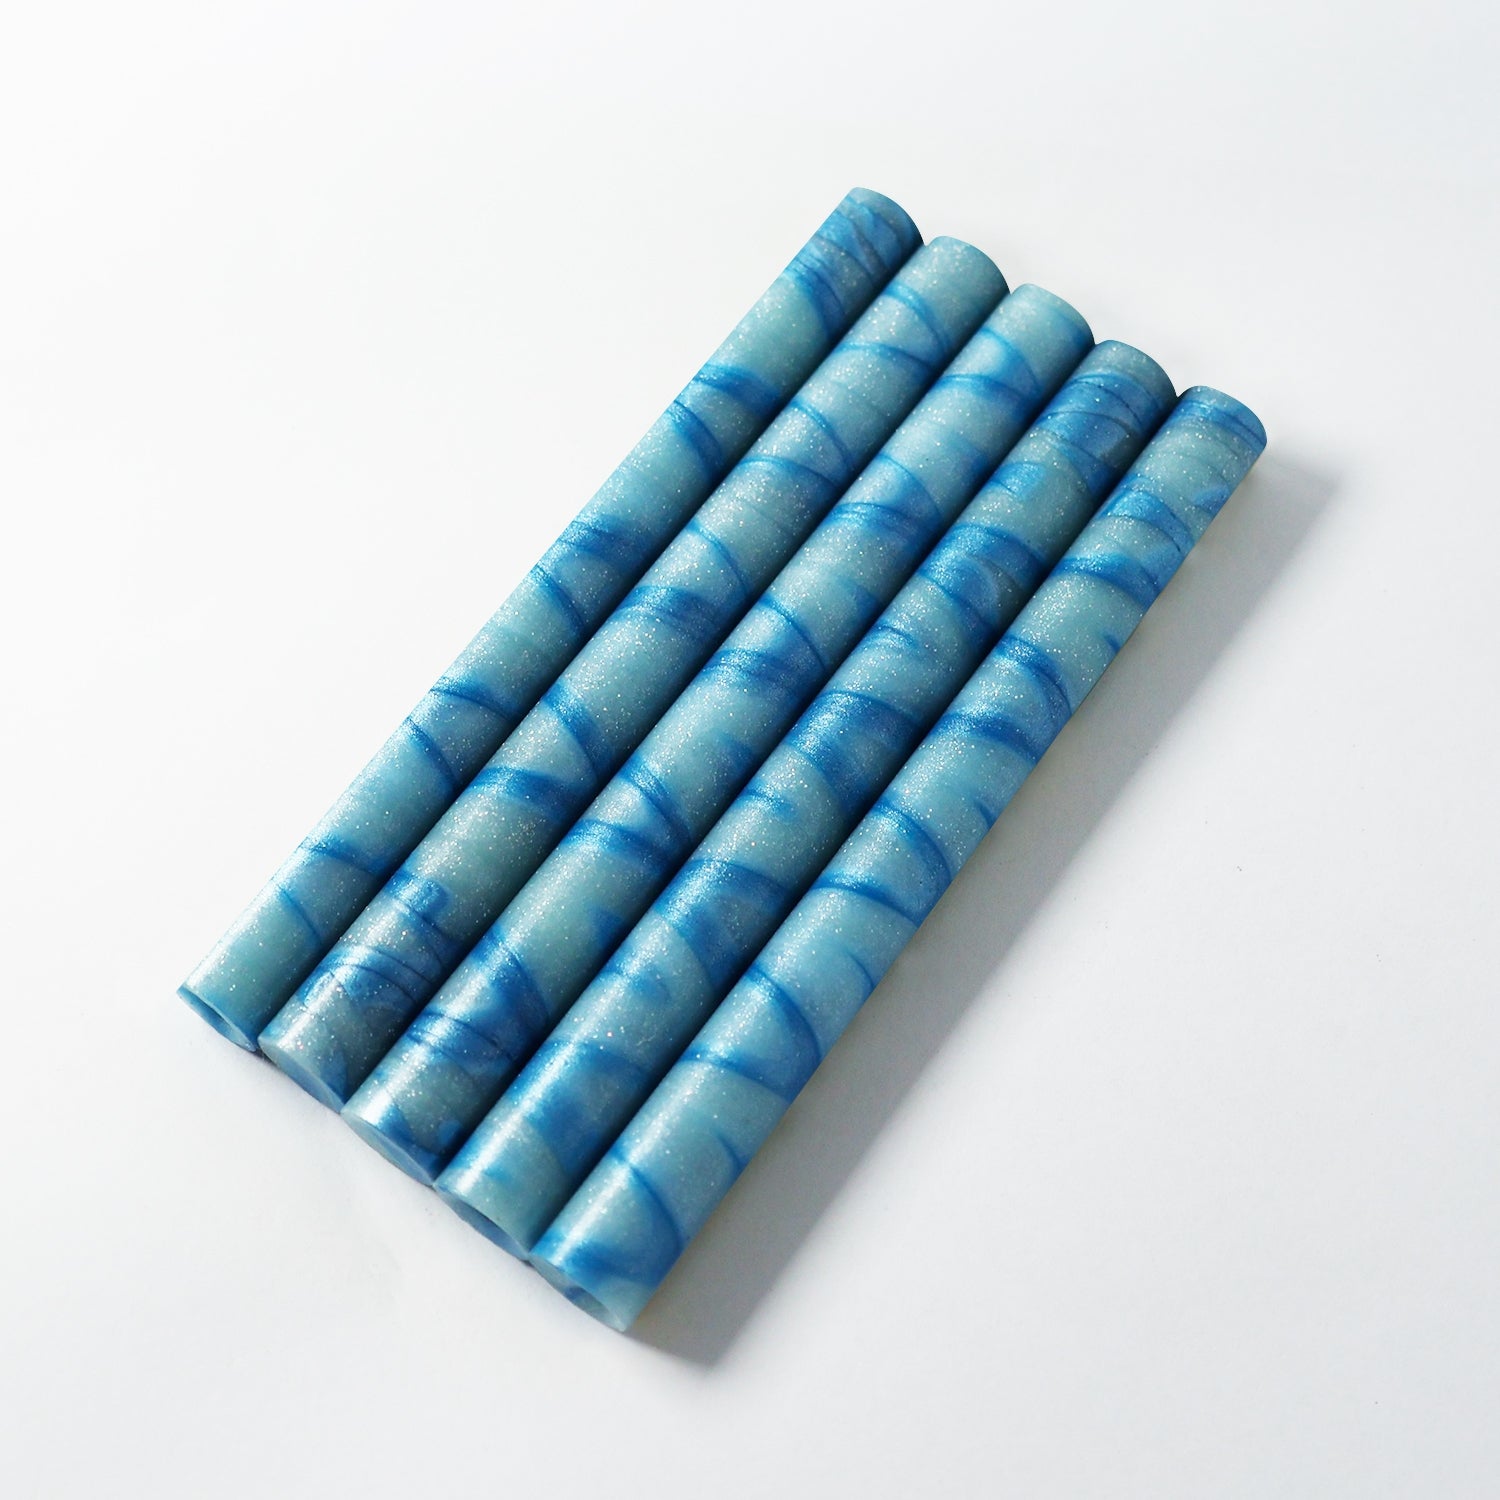 Dreamy Mixed Color Glue Gun Sealing Wax Stick - Mixed Blue